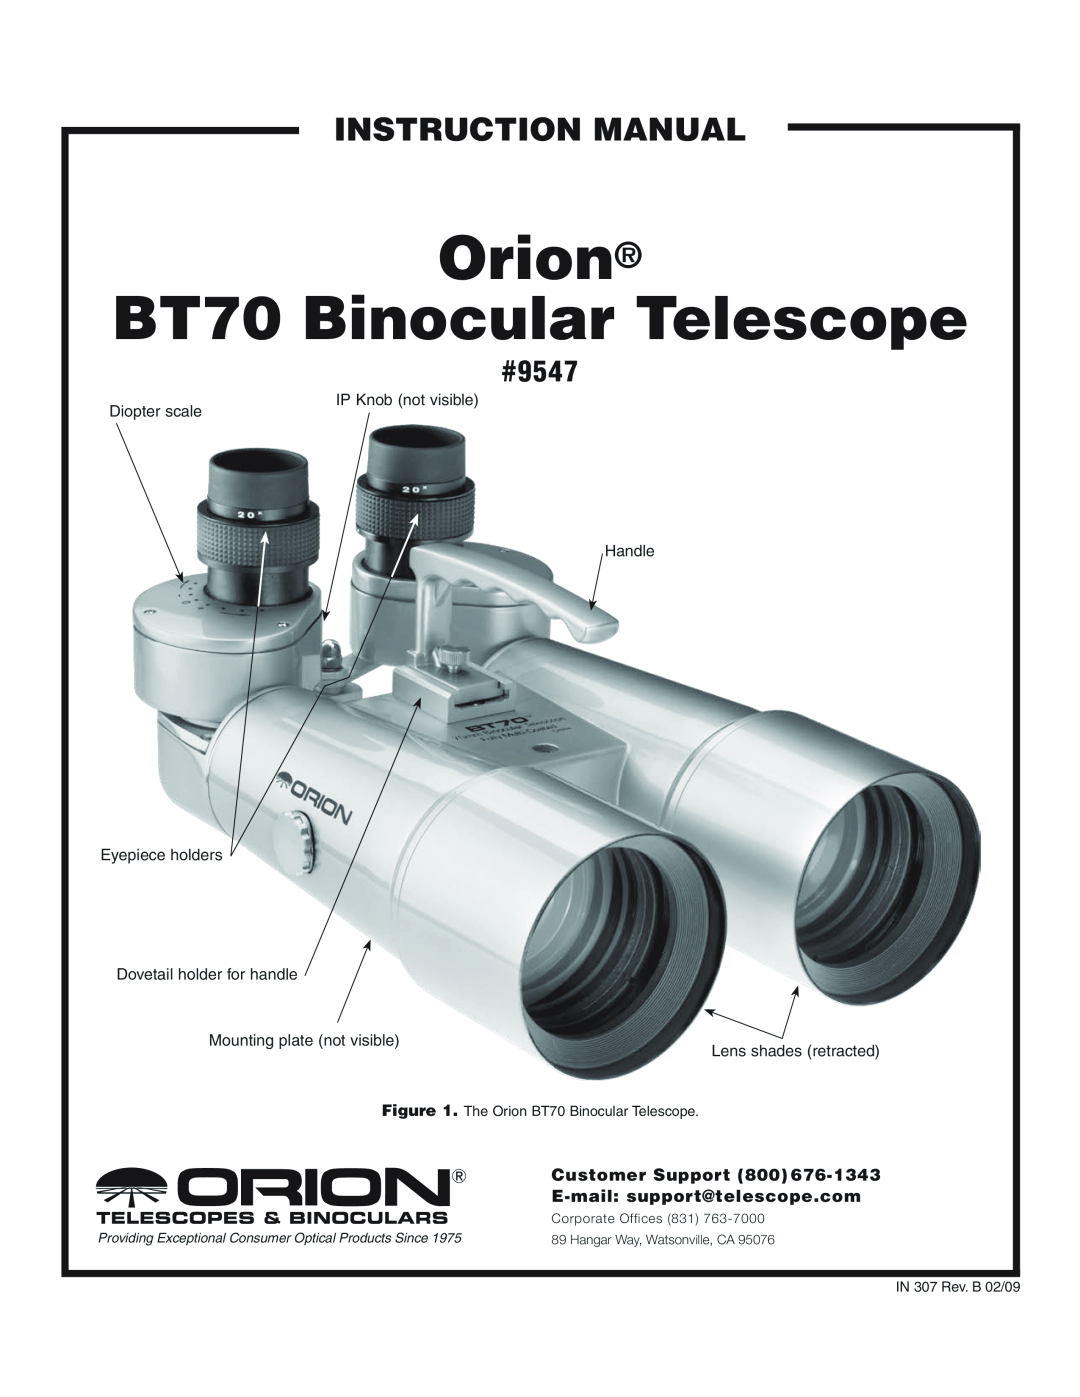 Orion instruction manual Customer Support 800, E-mail support@telescope.com, Orion, BT70 Binocular Telescope, #9547 